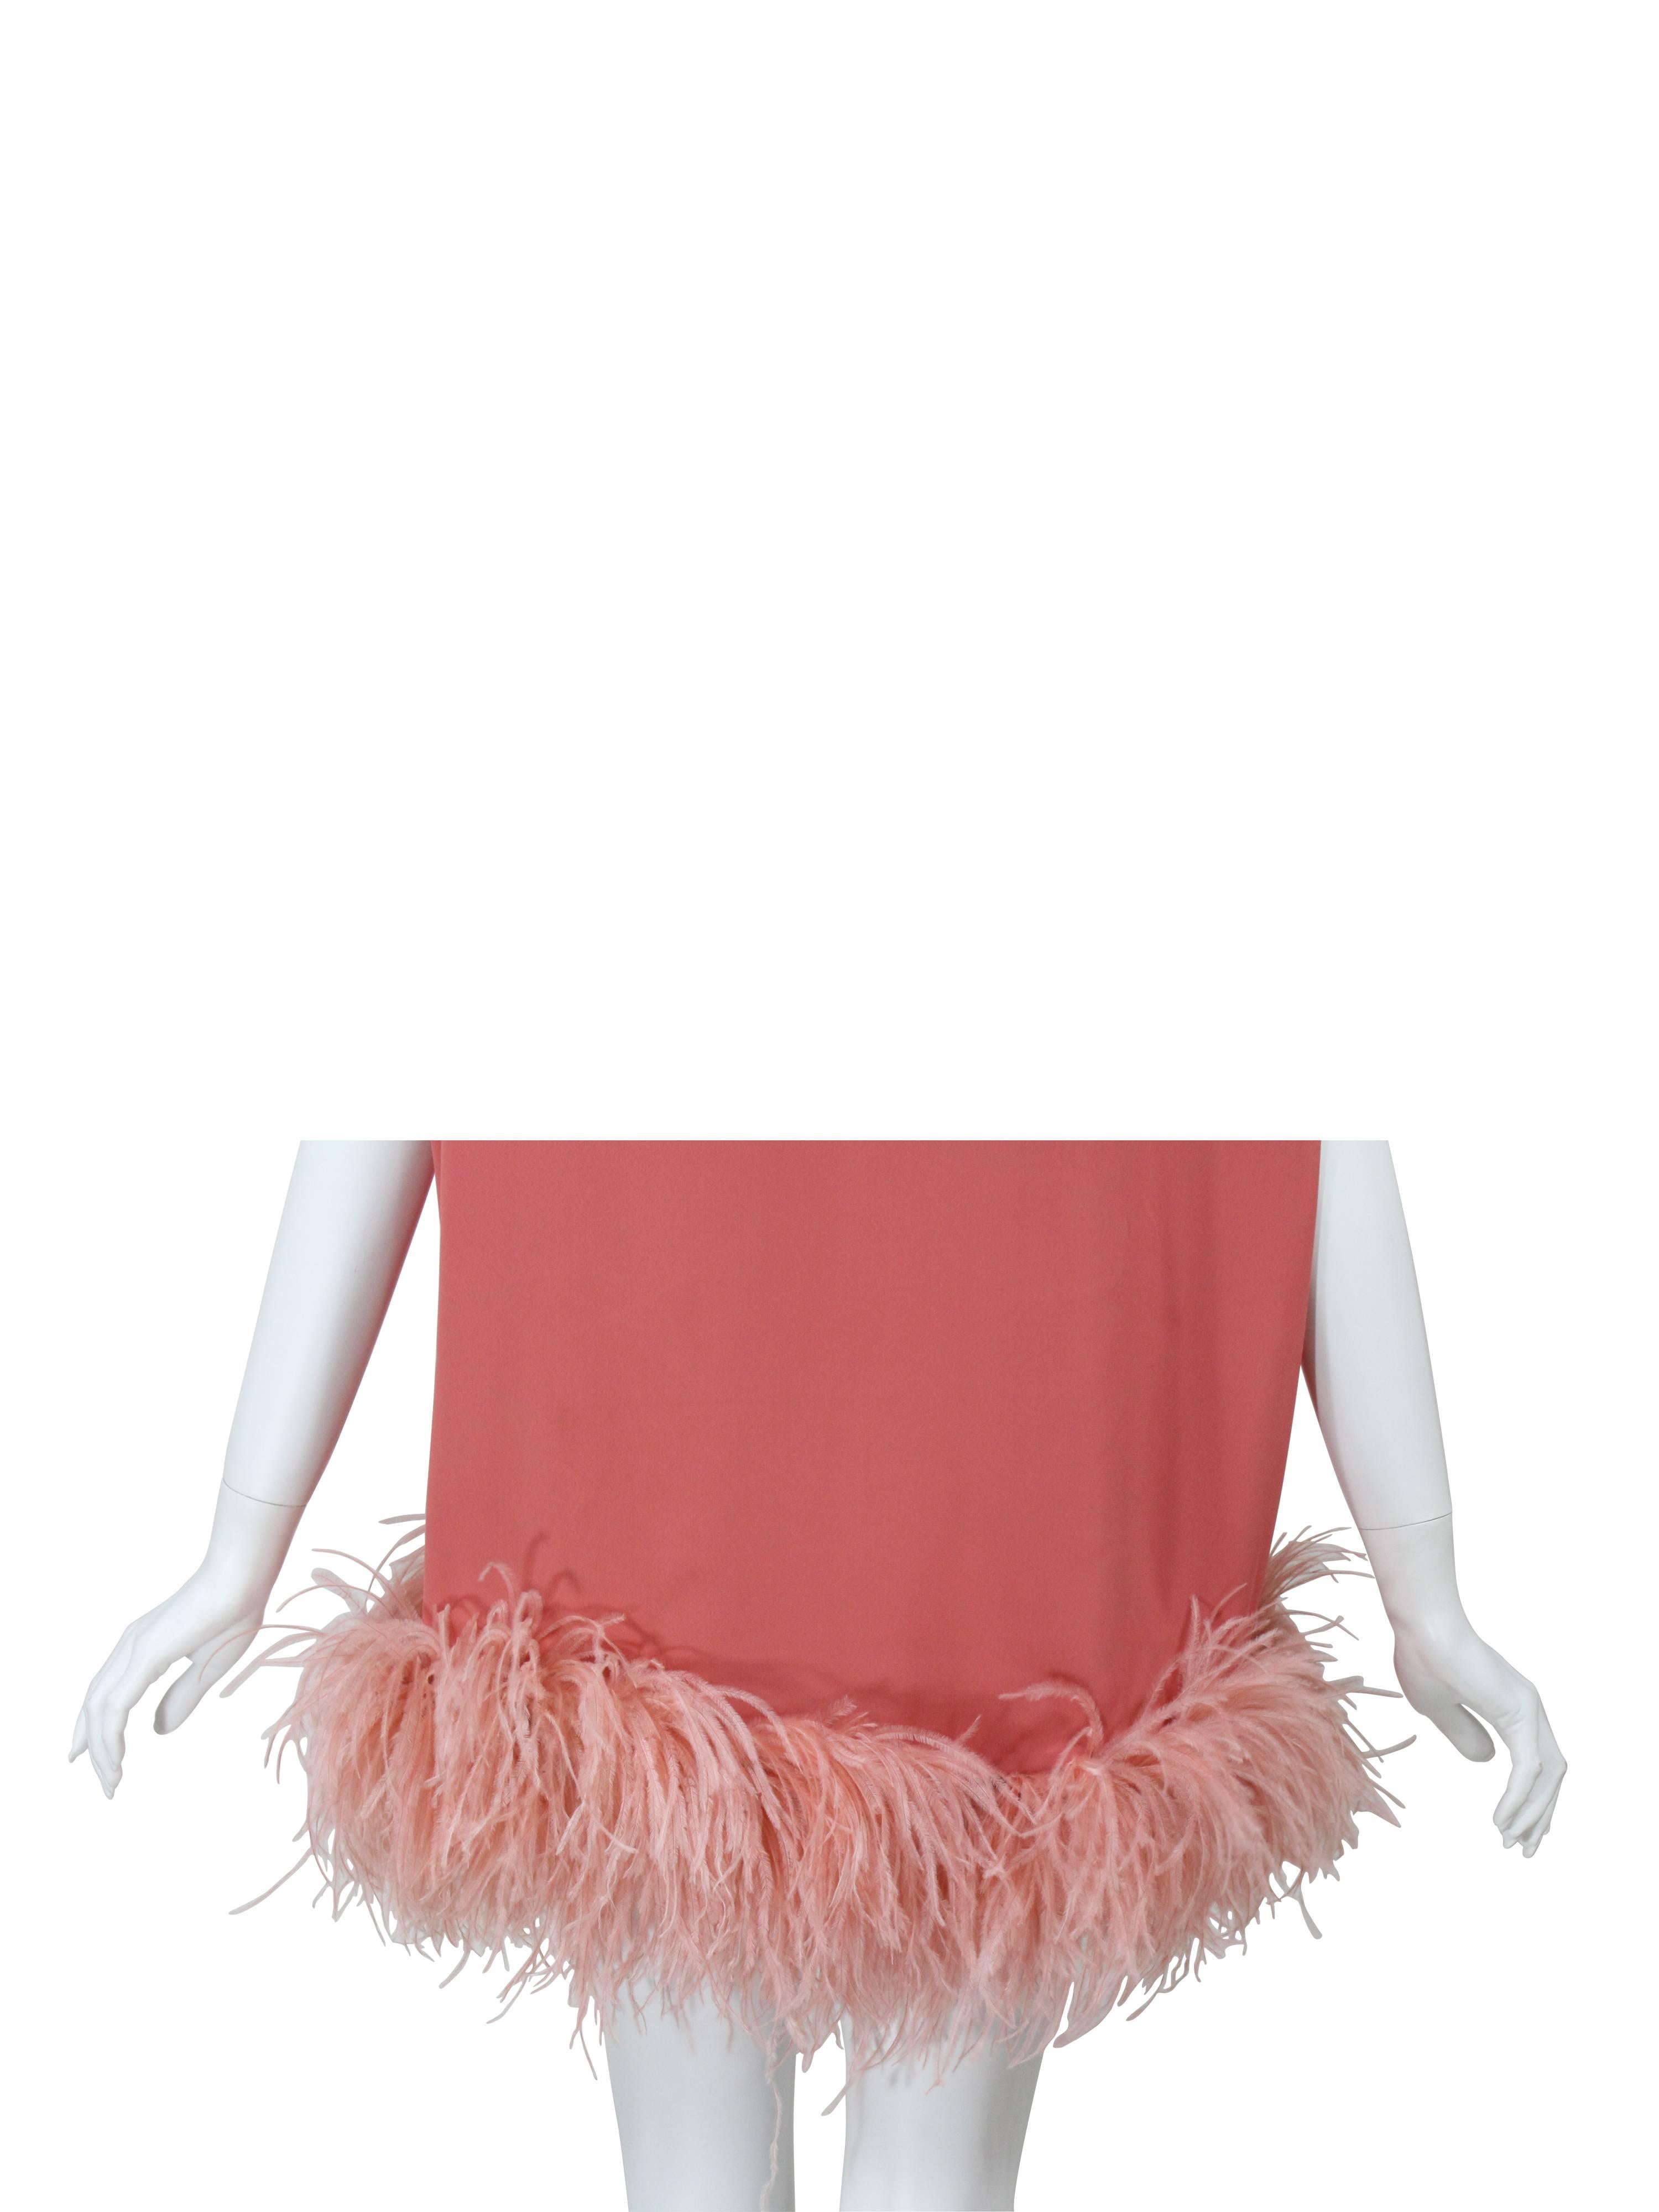 Dries Van Noten Pink Crepe Feather Trim Tunic Top Runway F/W 2013 For Sale 1